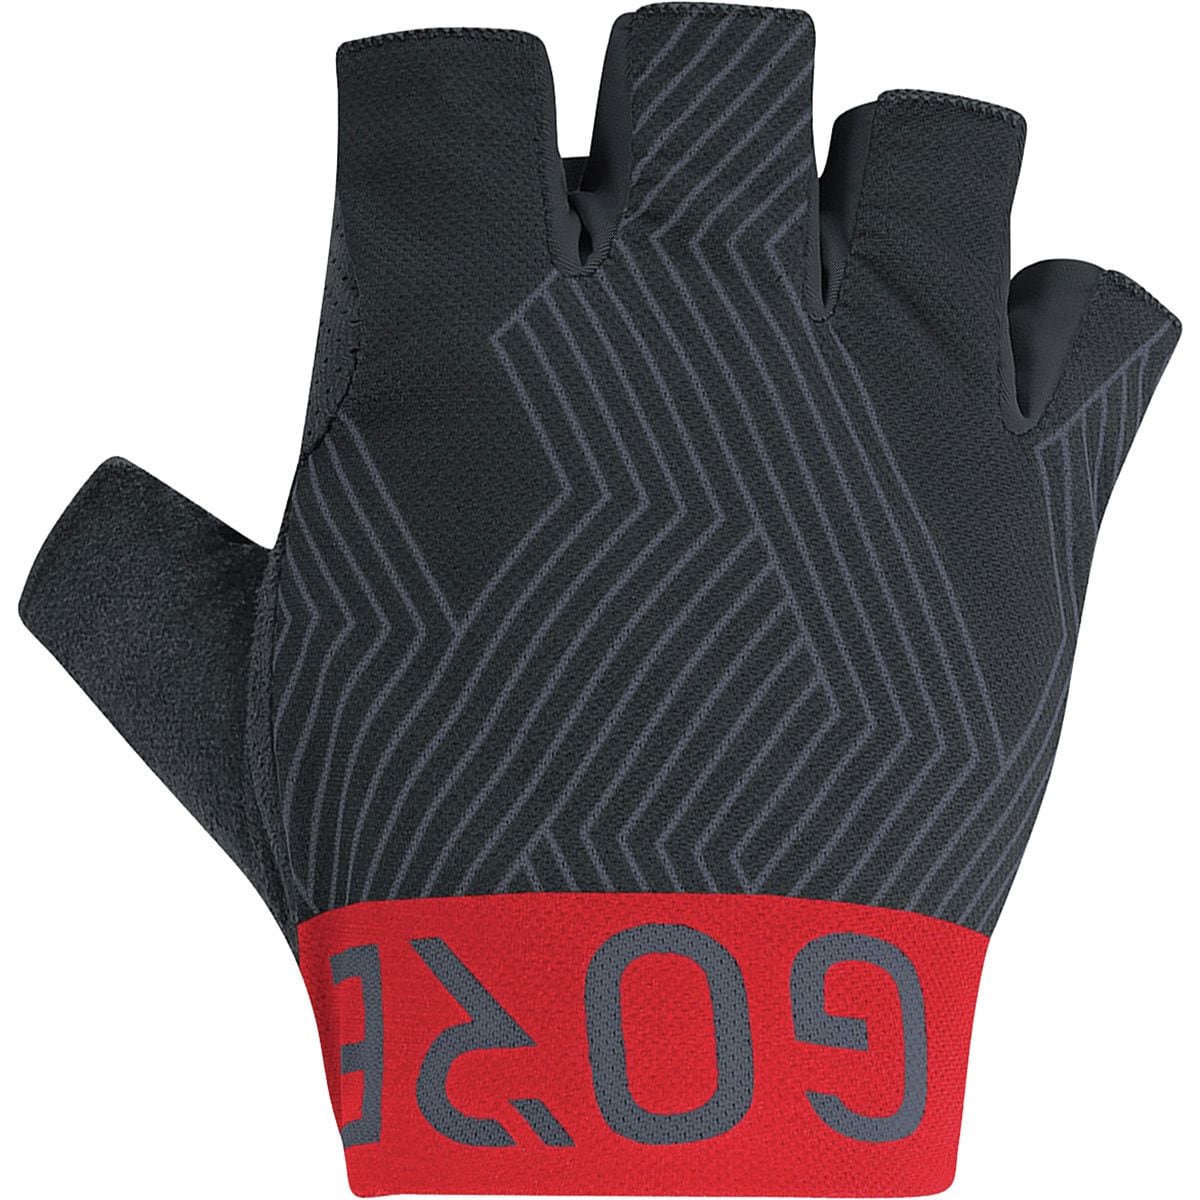 Gore Wear C7 Short Finger Pro Glove - Men's